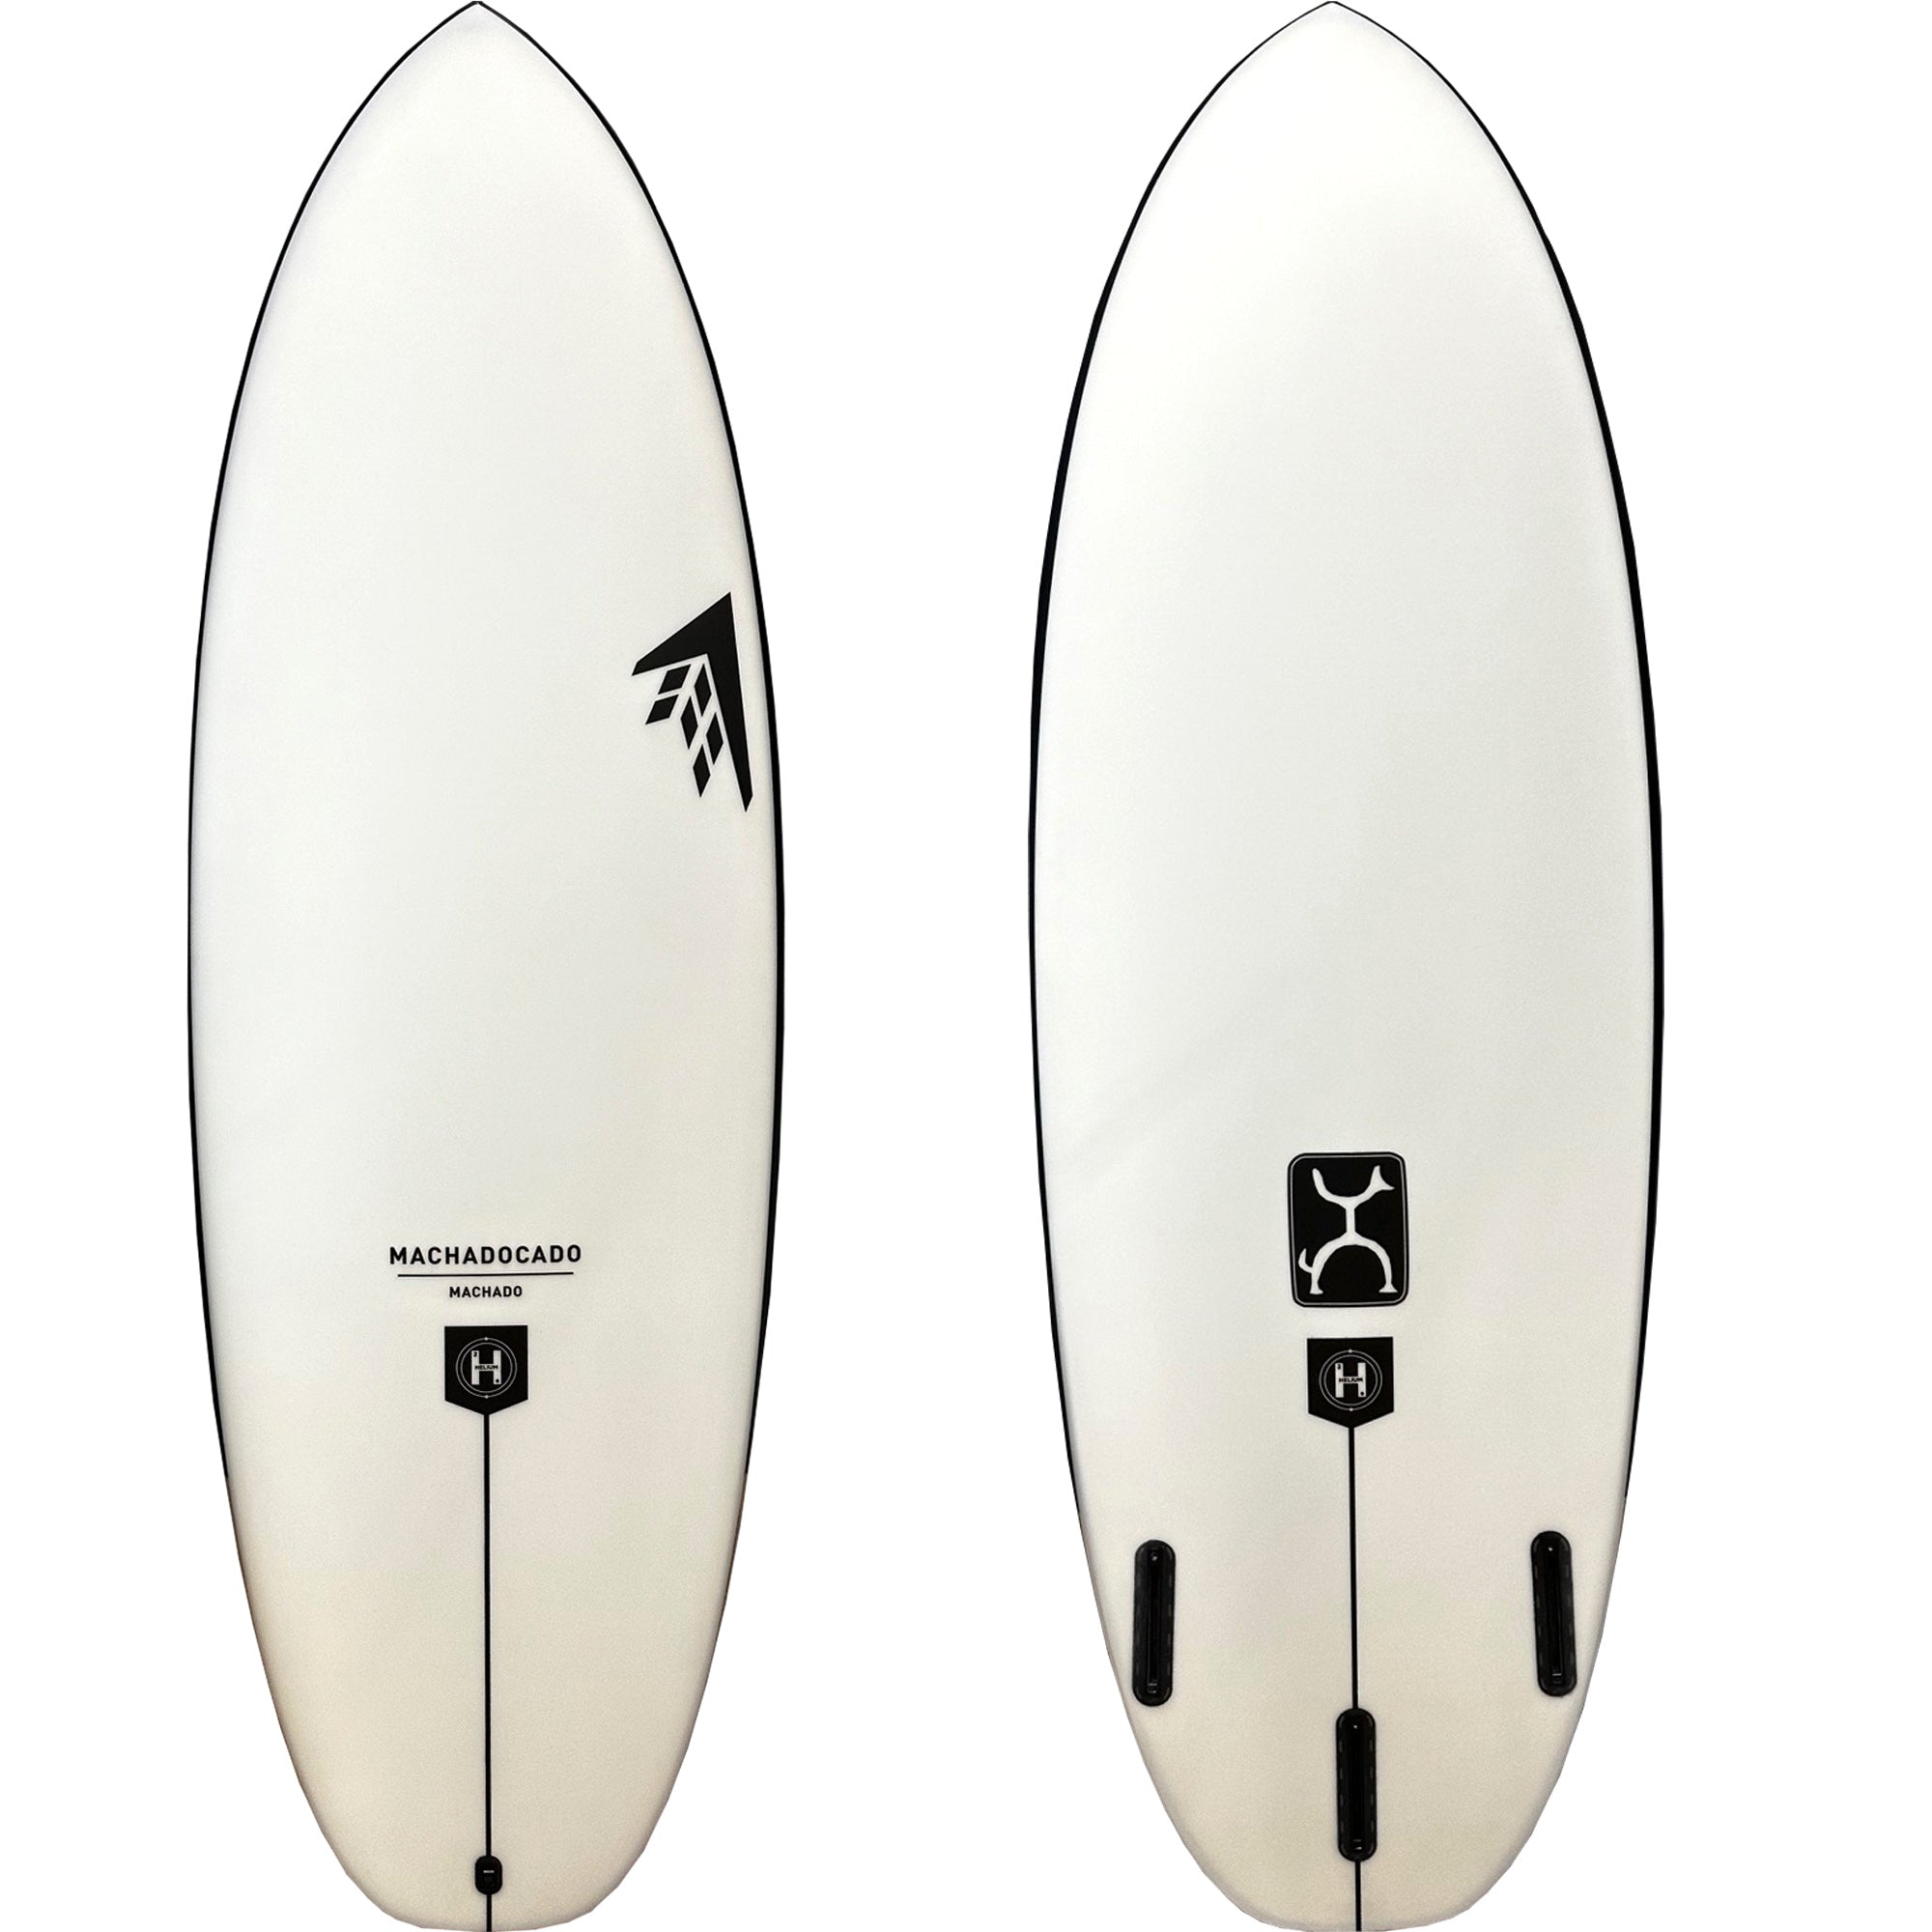 Firewire Machadocado Surfboard - Futures